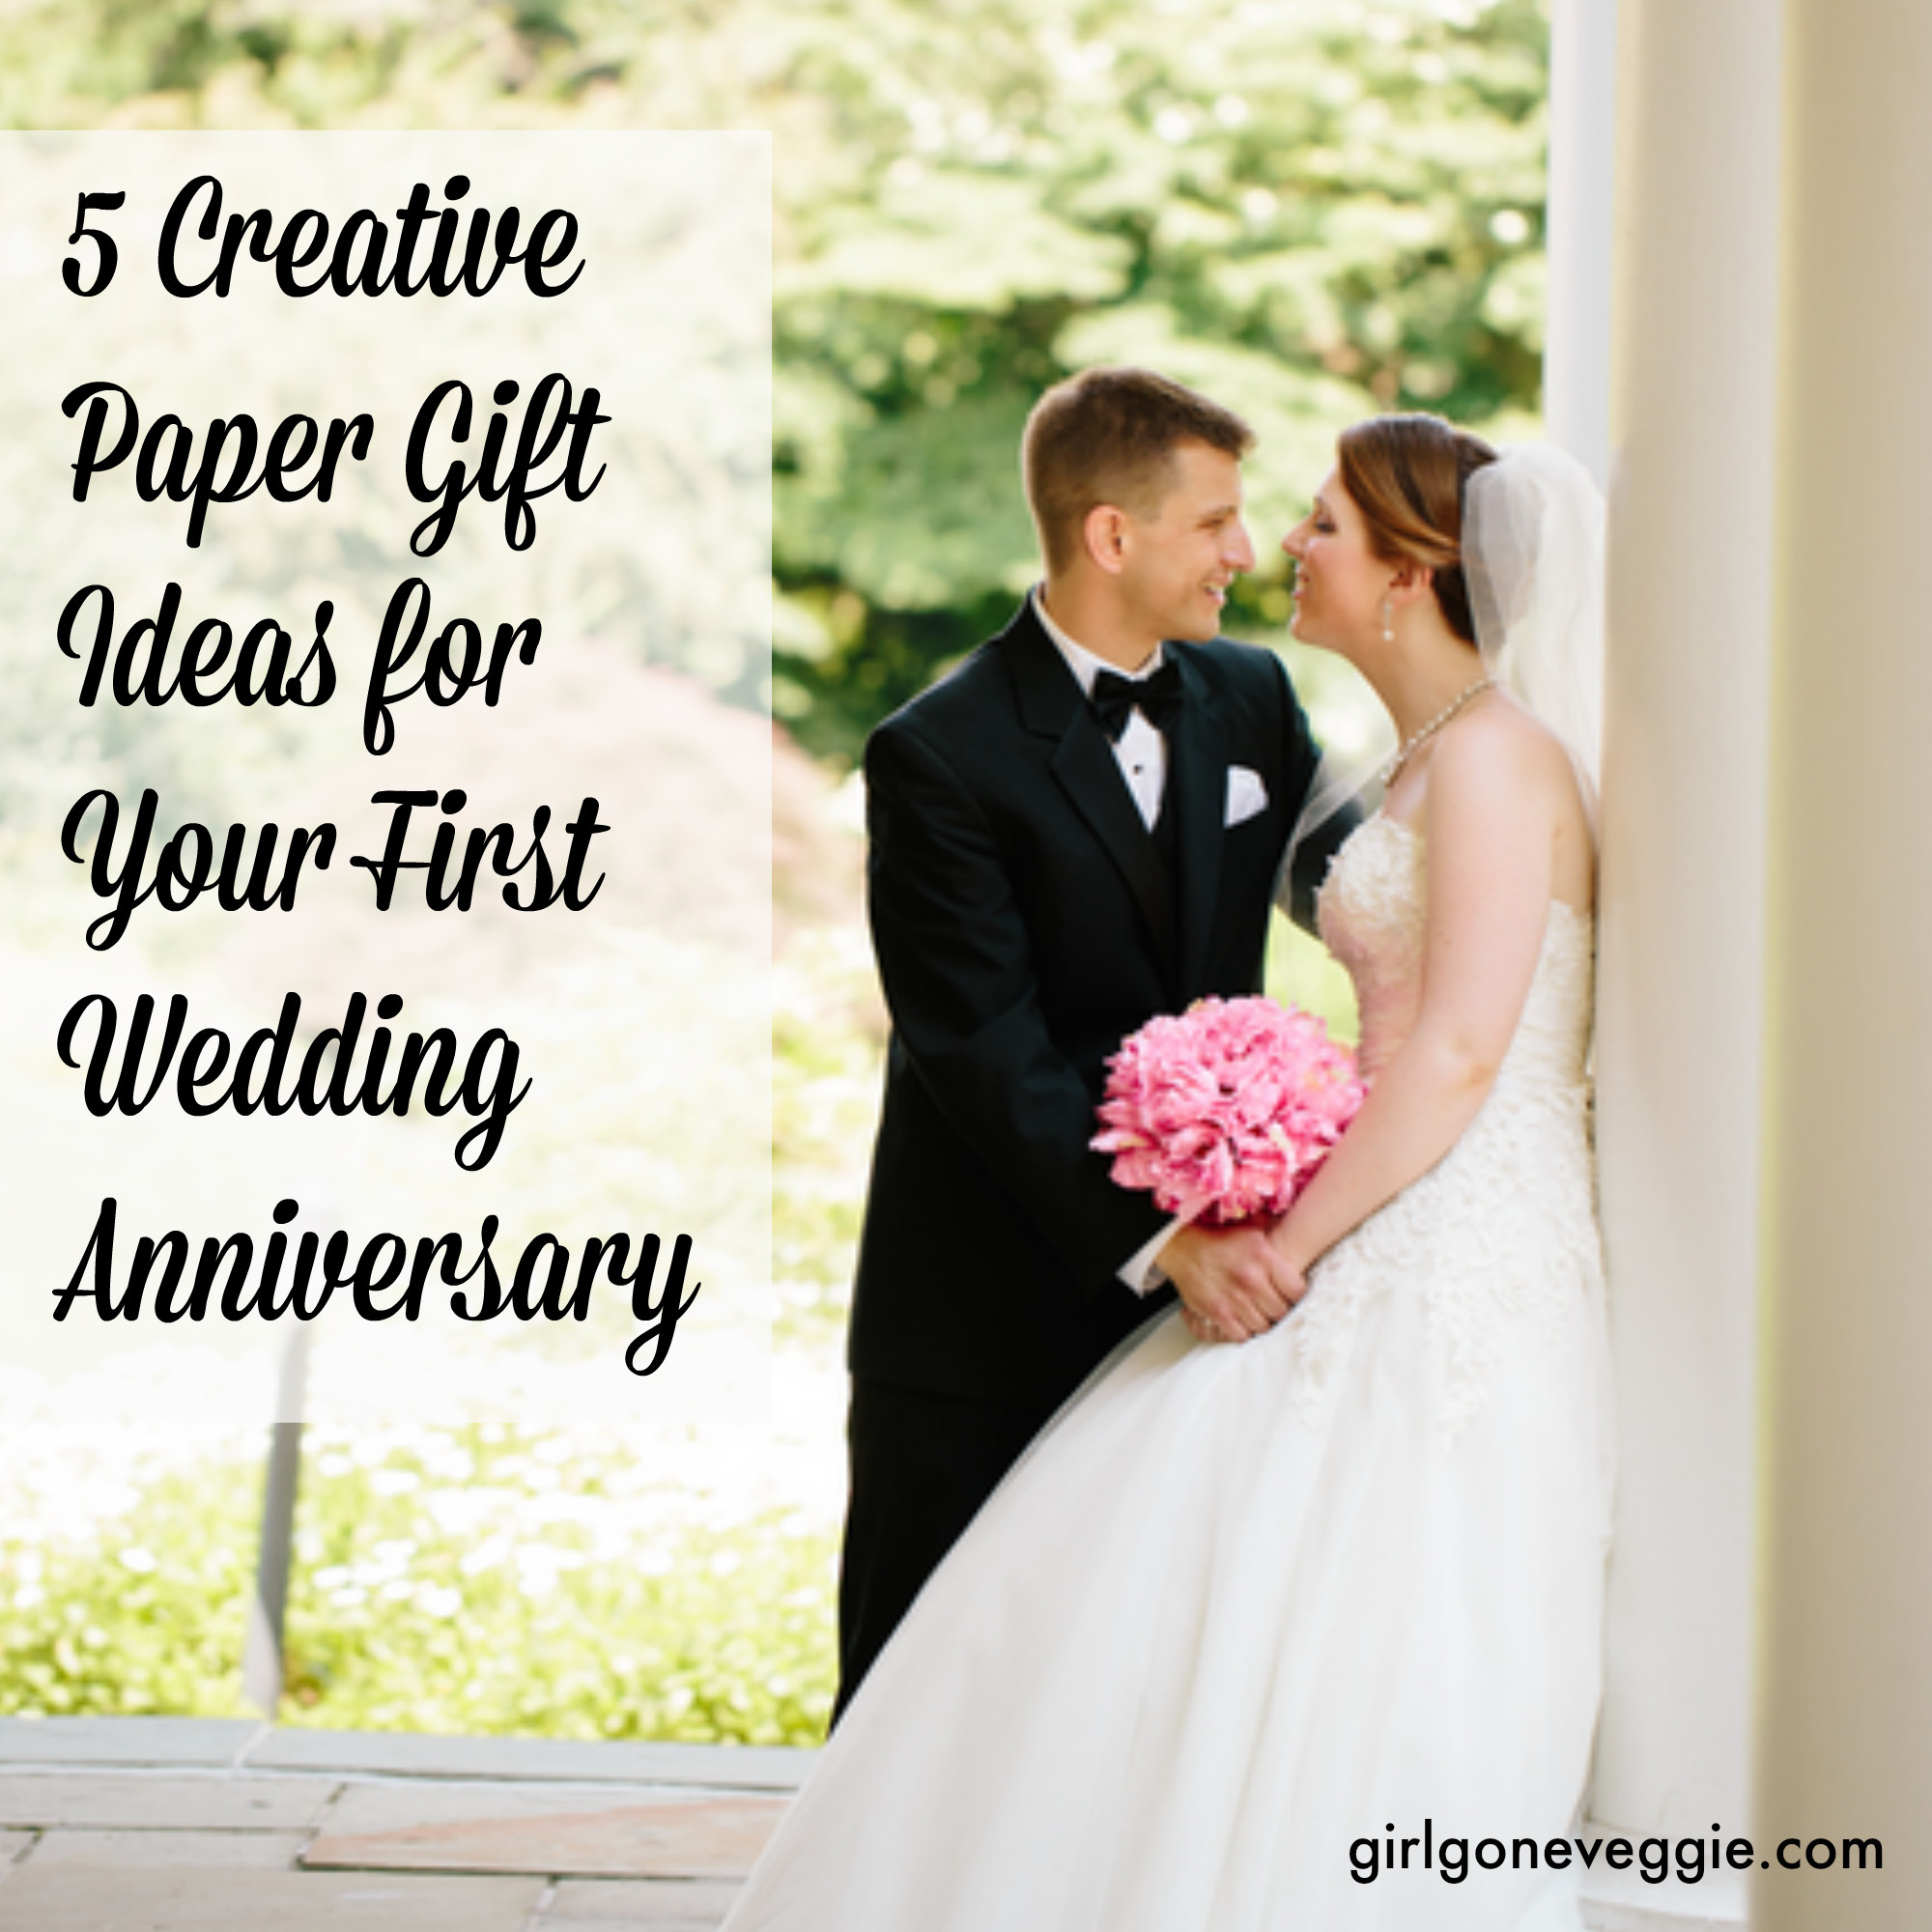 1st Wedding Anniversary Gifts
 5 Creative Paper Gift Ideas for Your 1st Wedding Anniversary